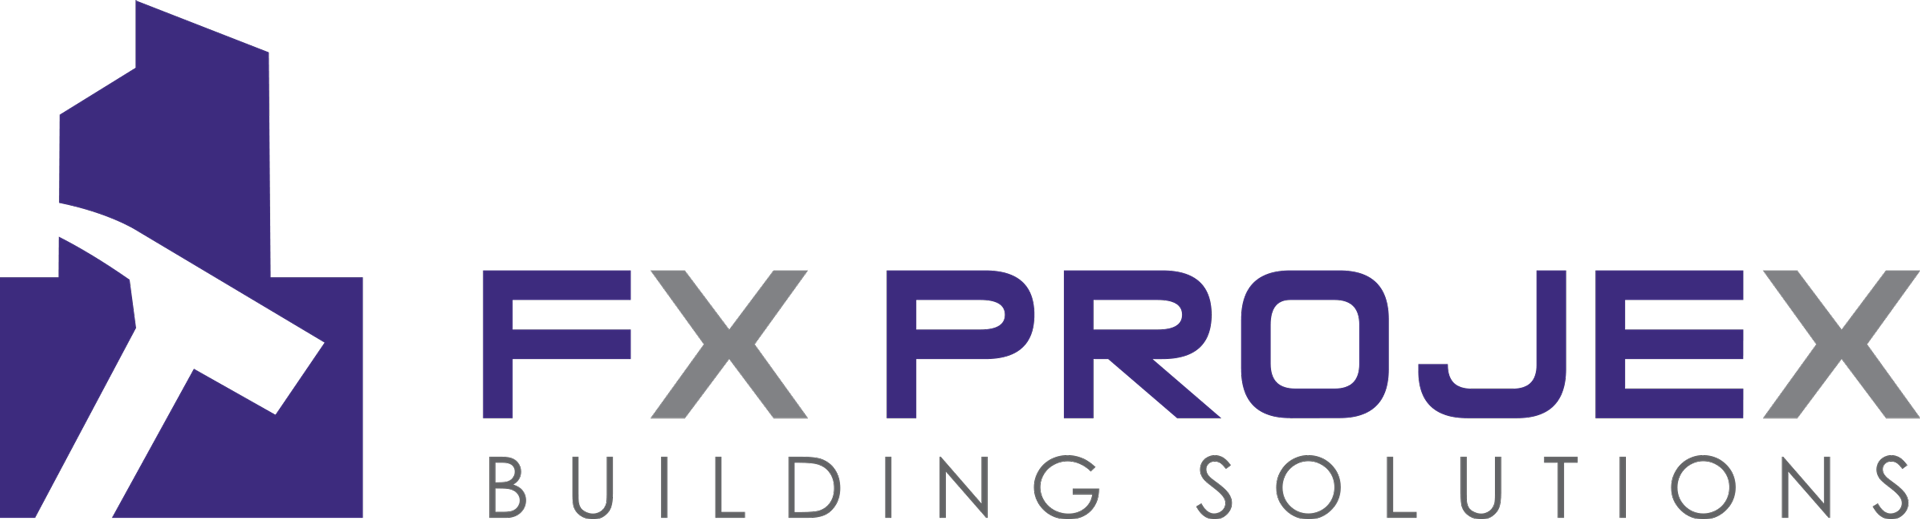 FX Projex Building Solutions